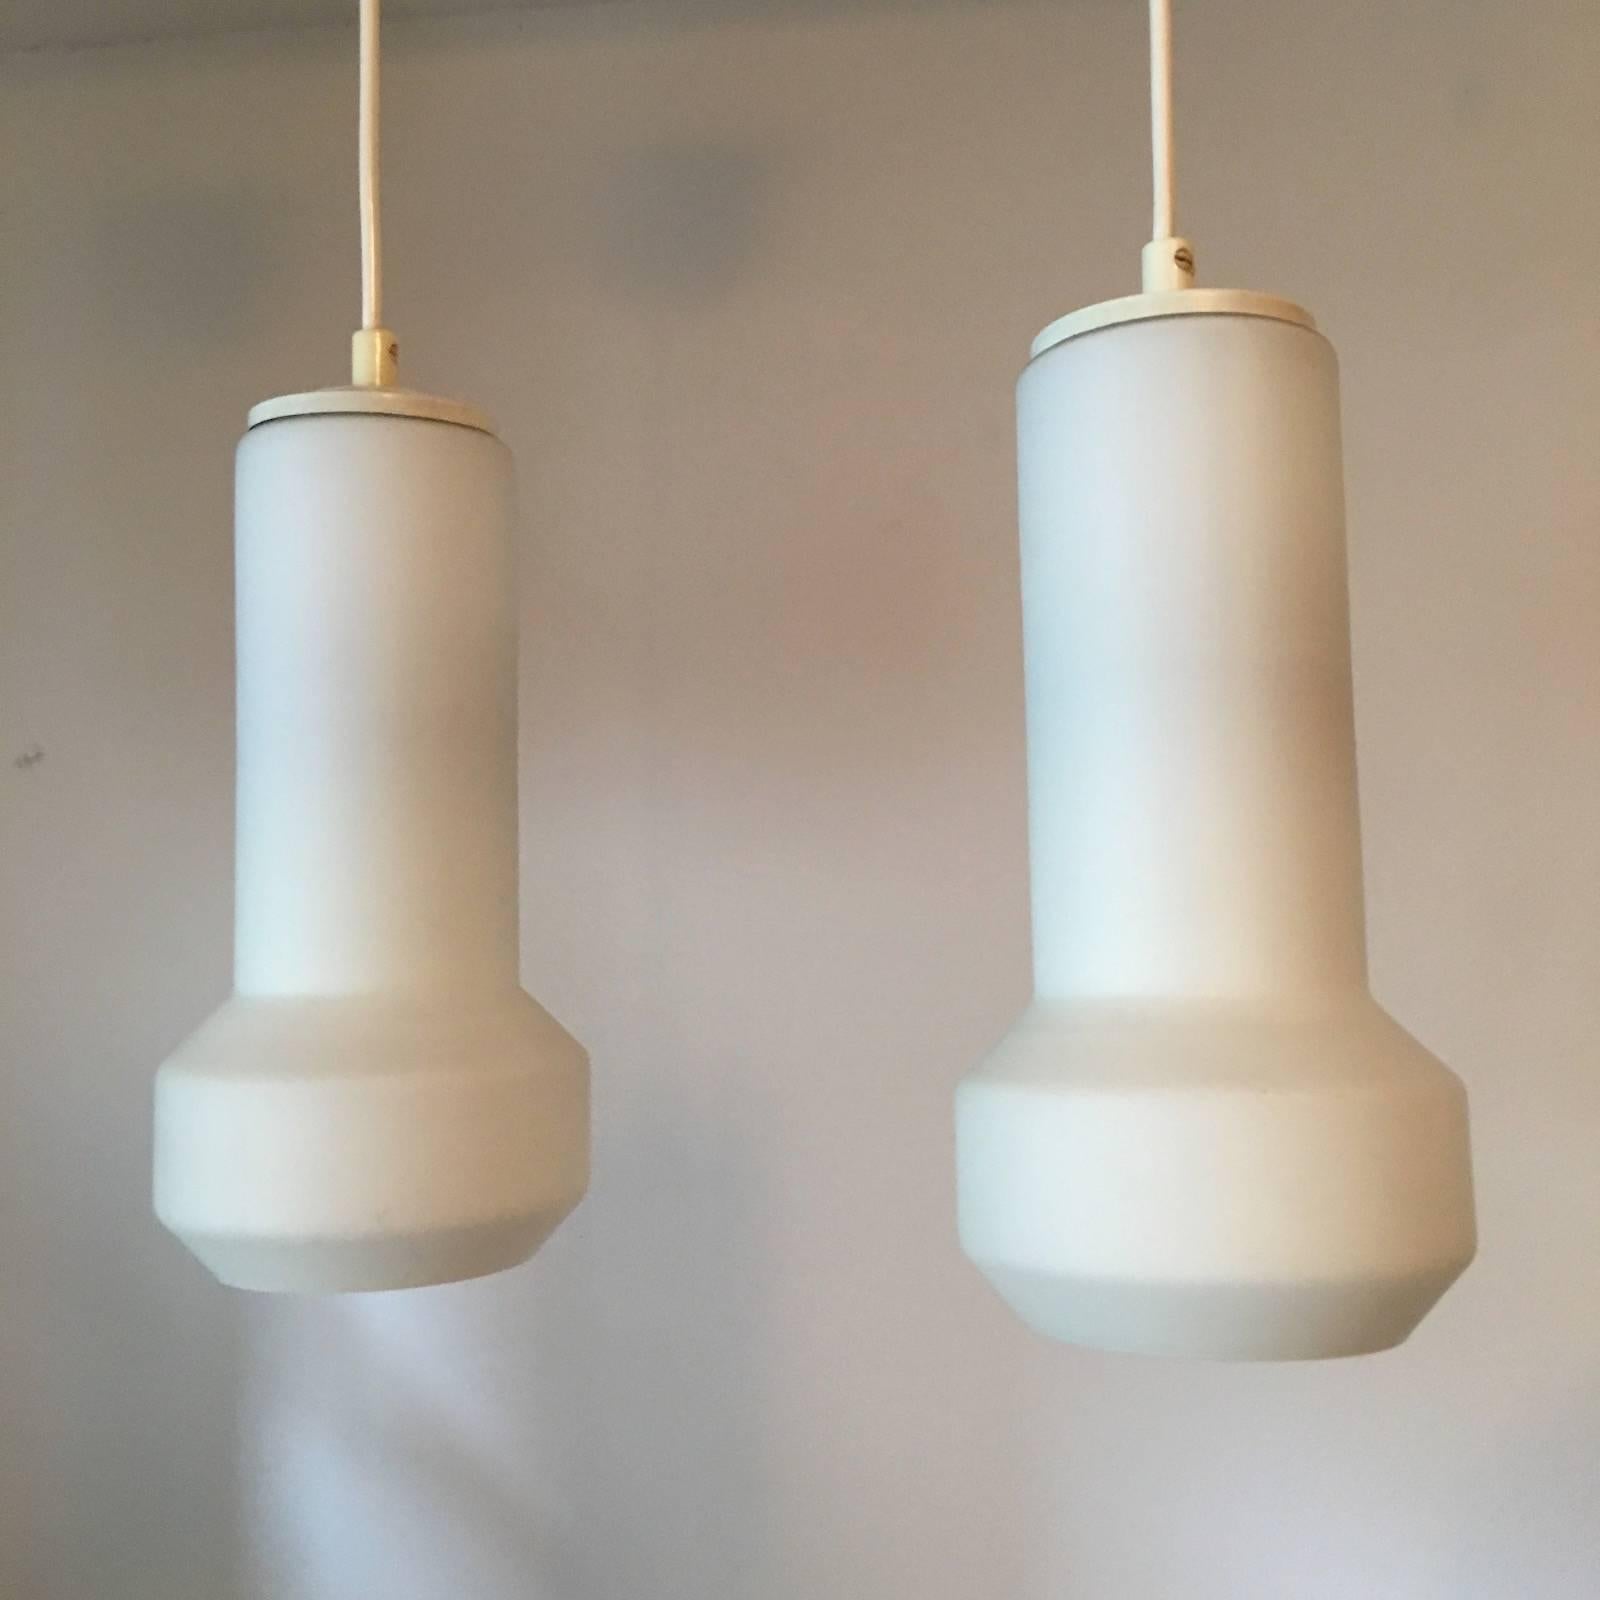 Pair of Milk Glass Lamp Pendants by Doria Leuchten, 1960s For Sale 3